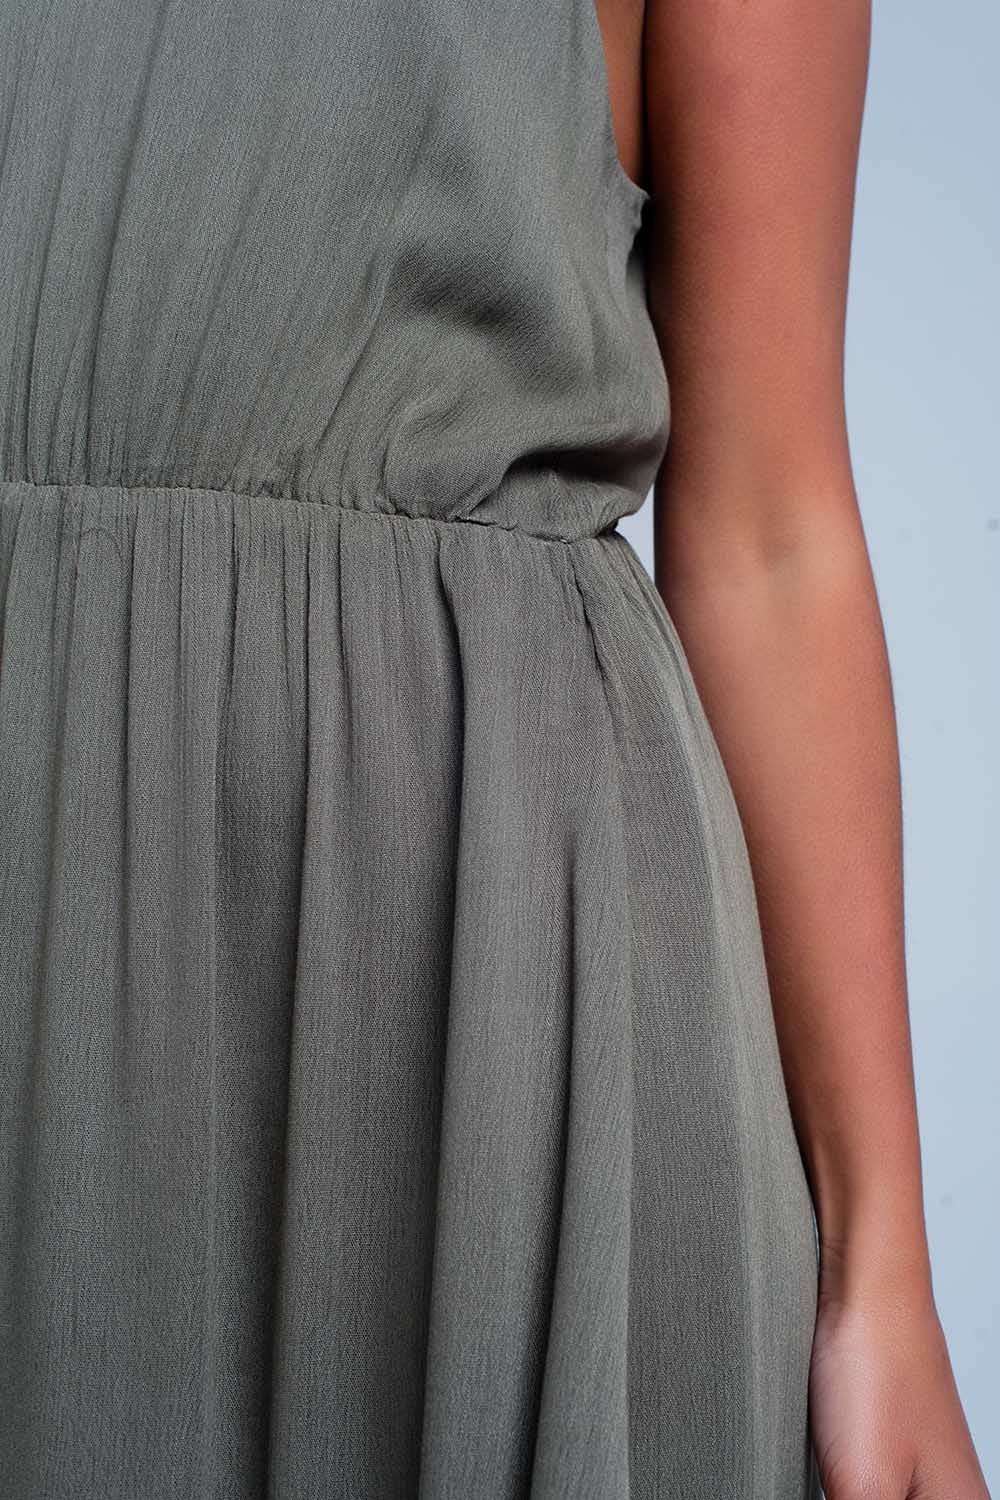 Khaki dress with crotchet trim - Szua Store